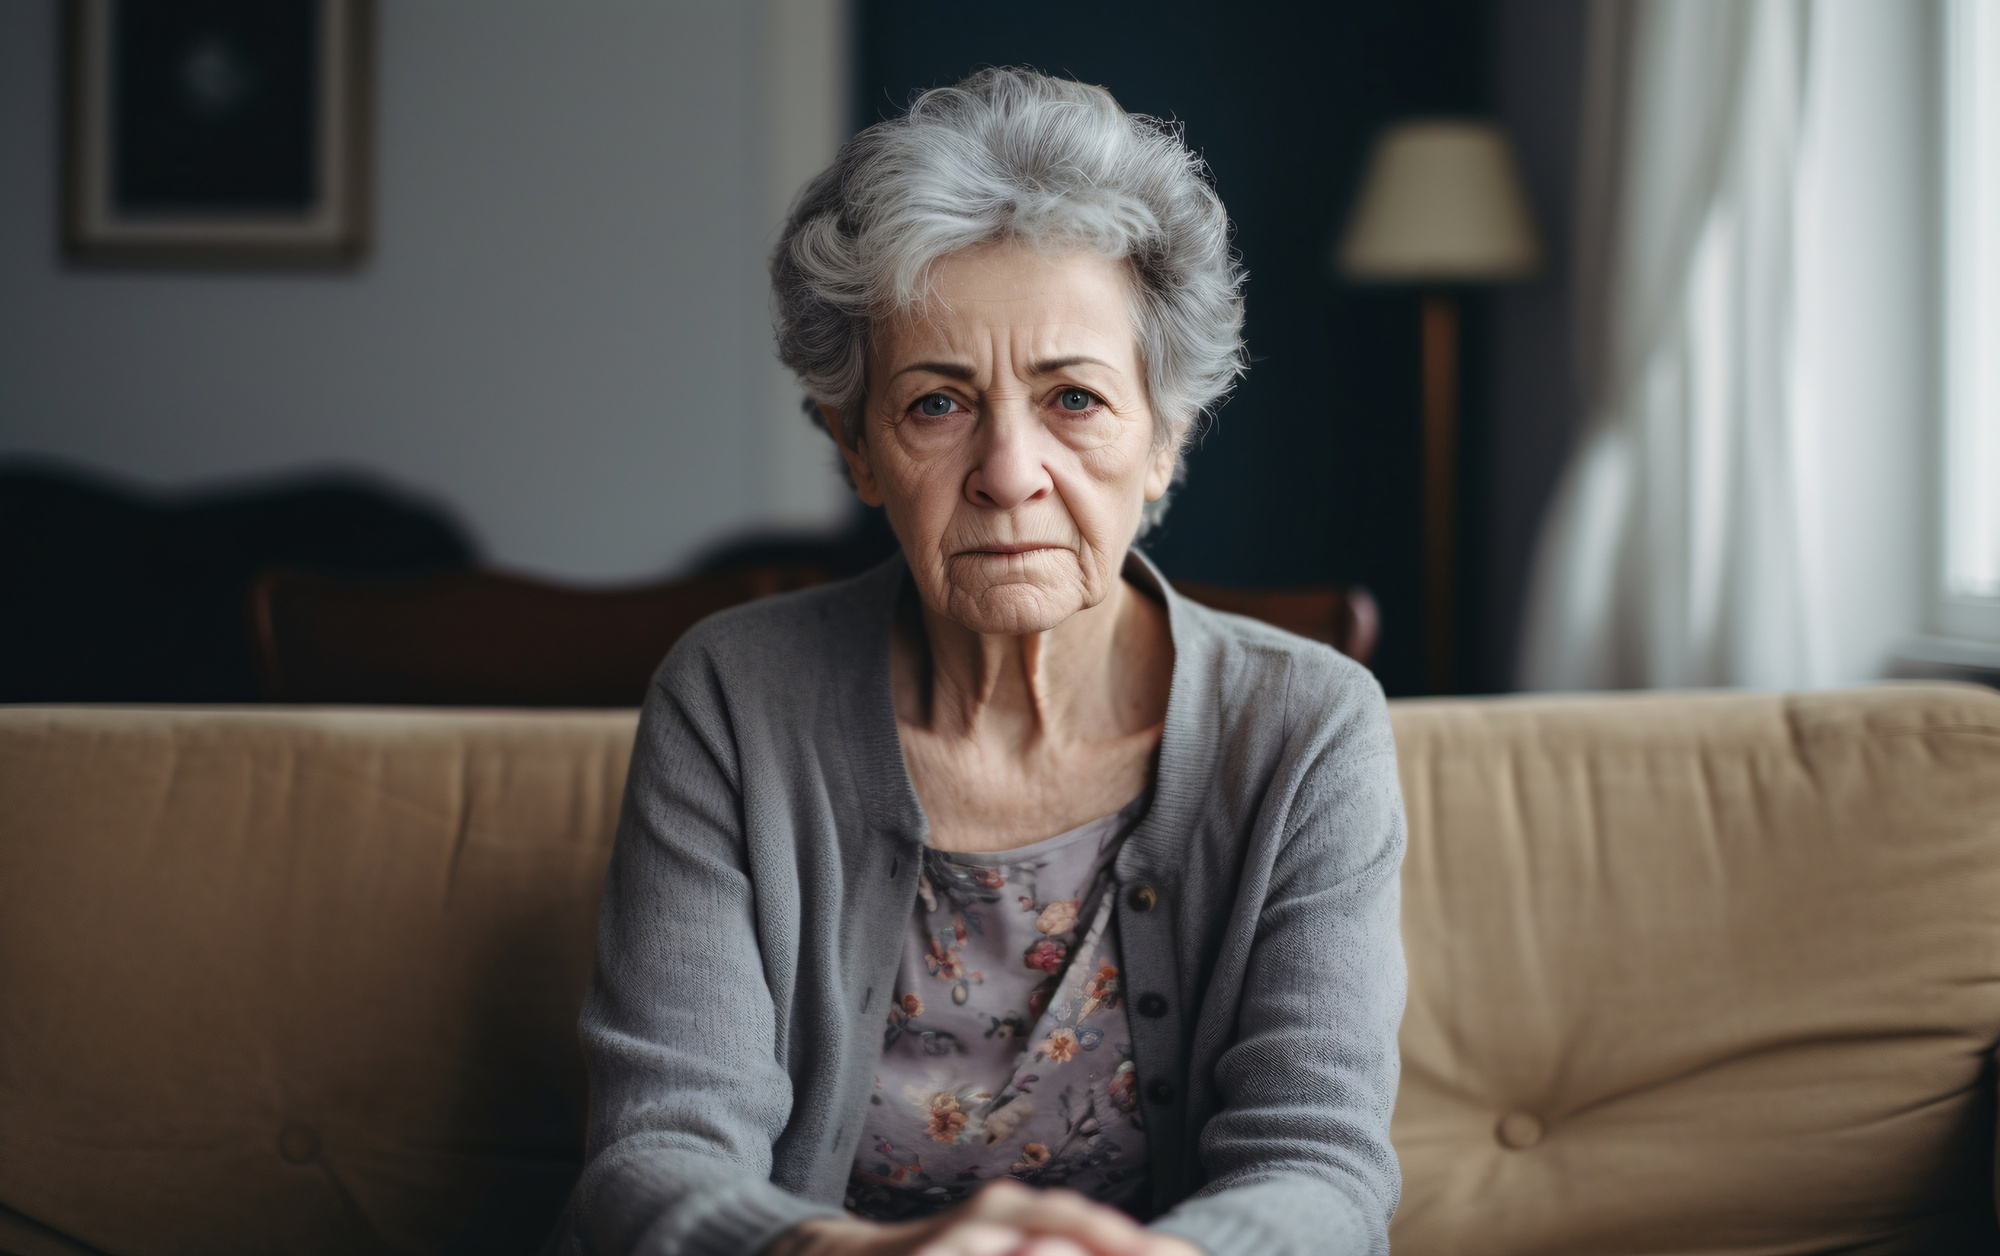 A sad and frustrated grandmother sitting on a sofa | Source: Freepik